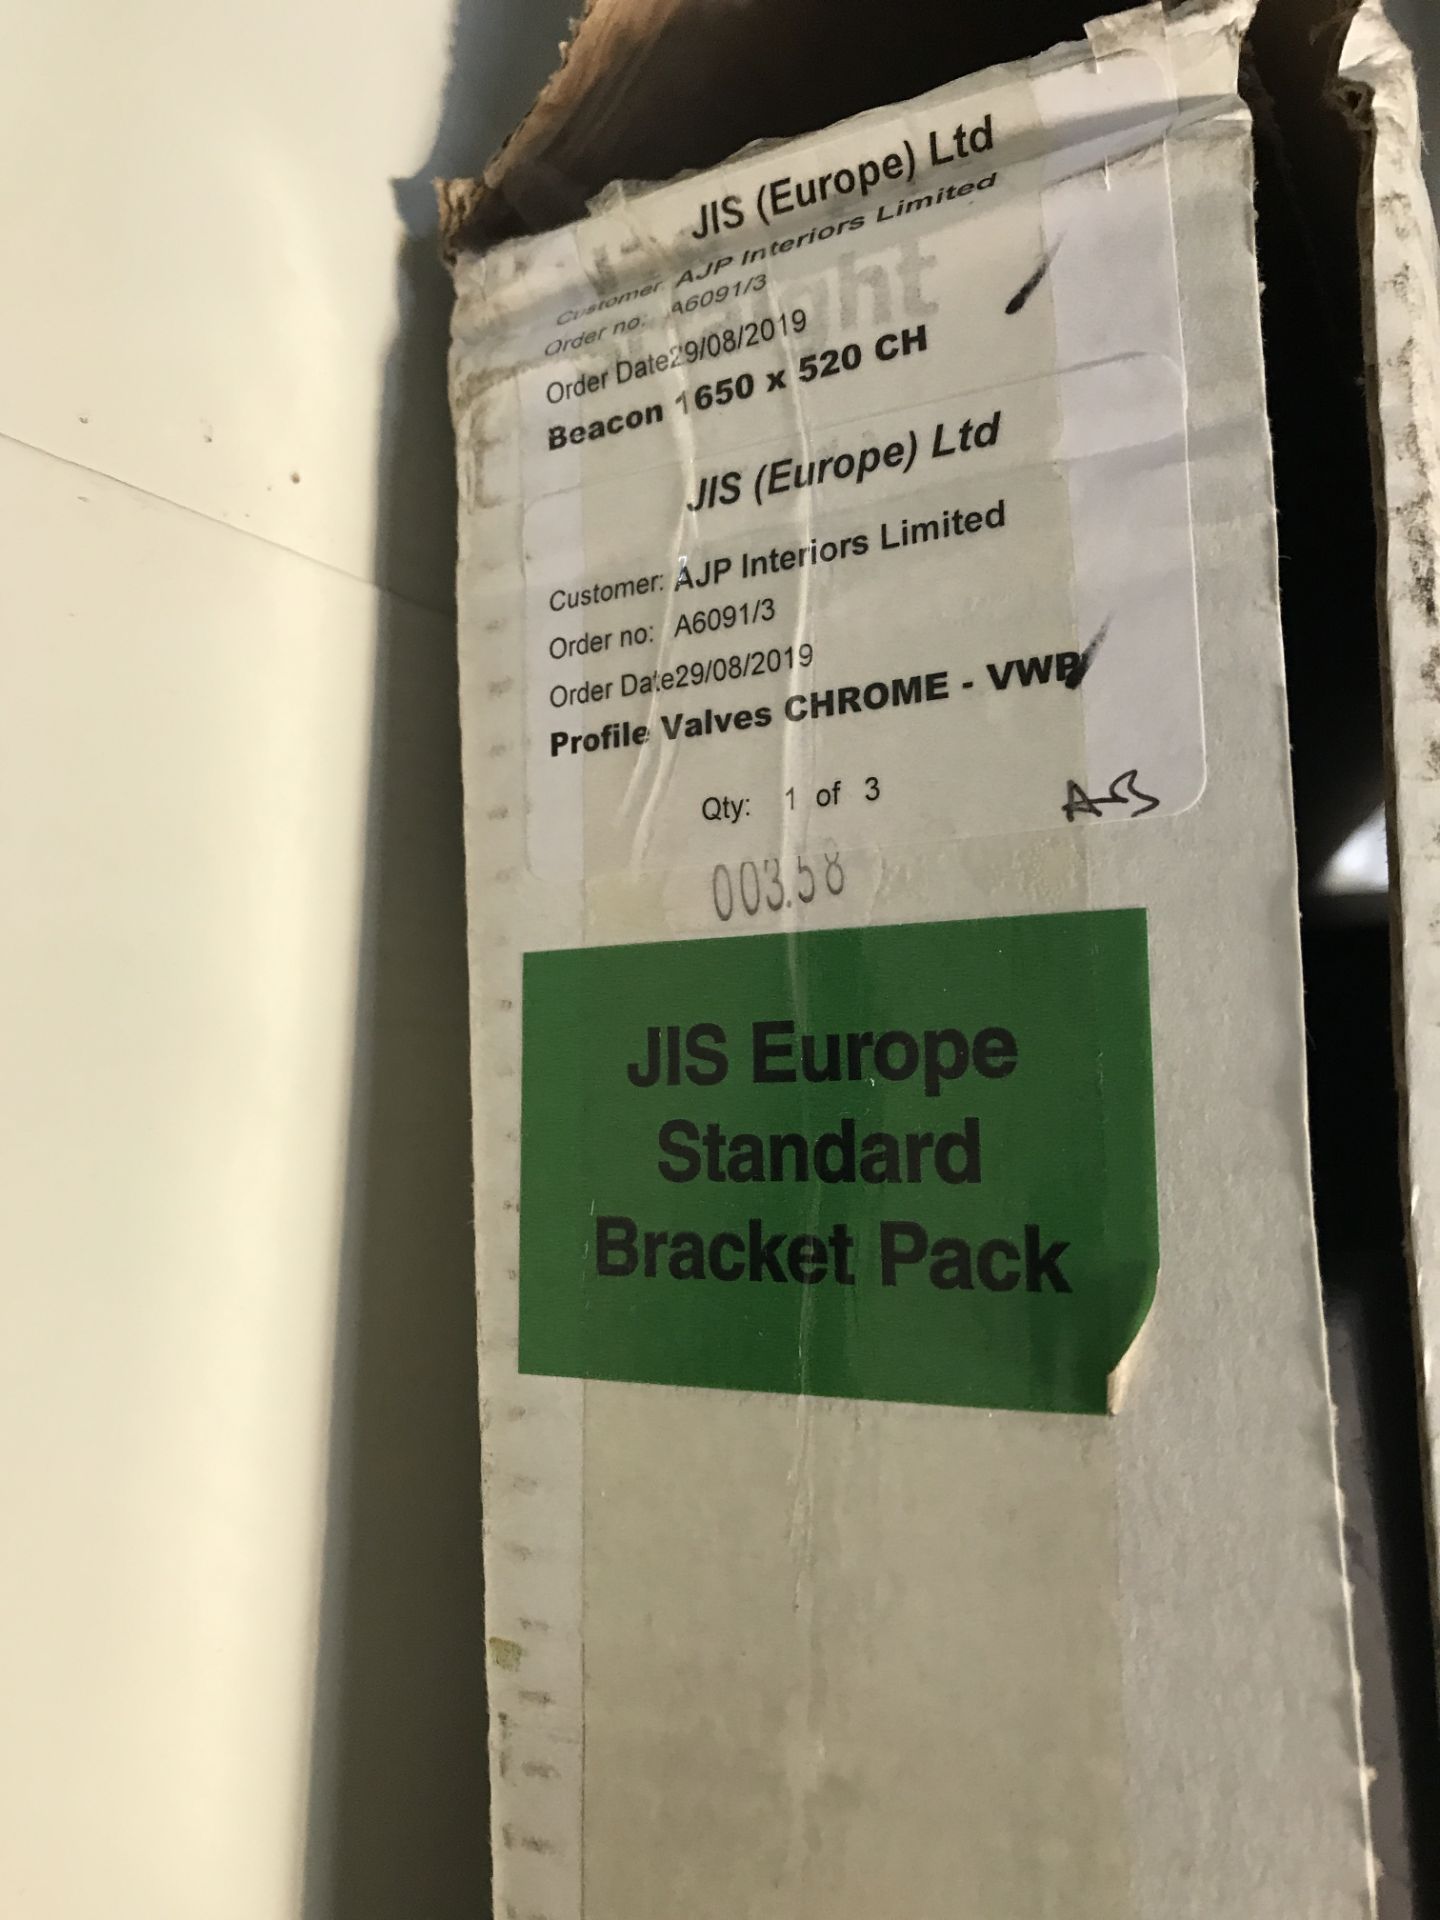 Jis Europe Heated Towel Rail - Image 2 of 3